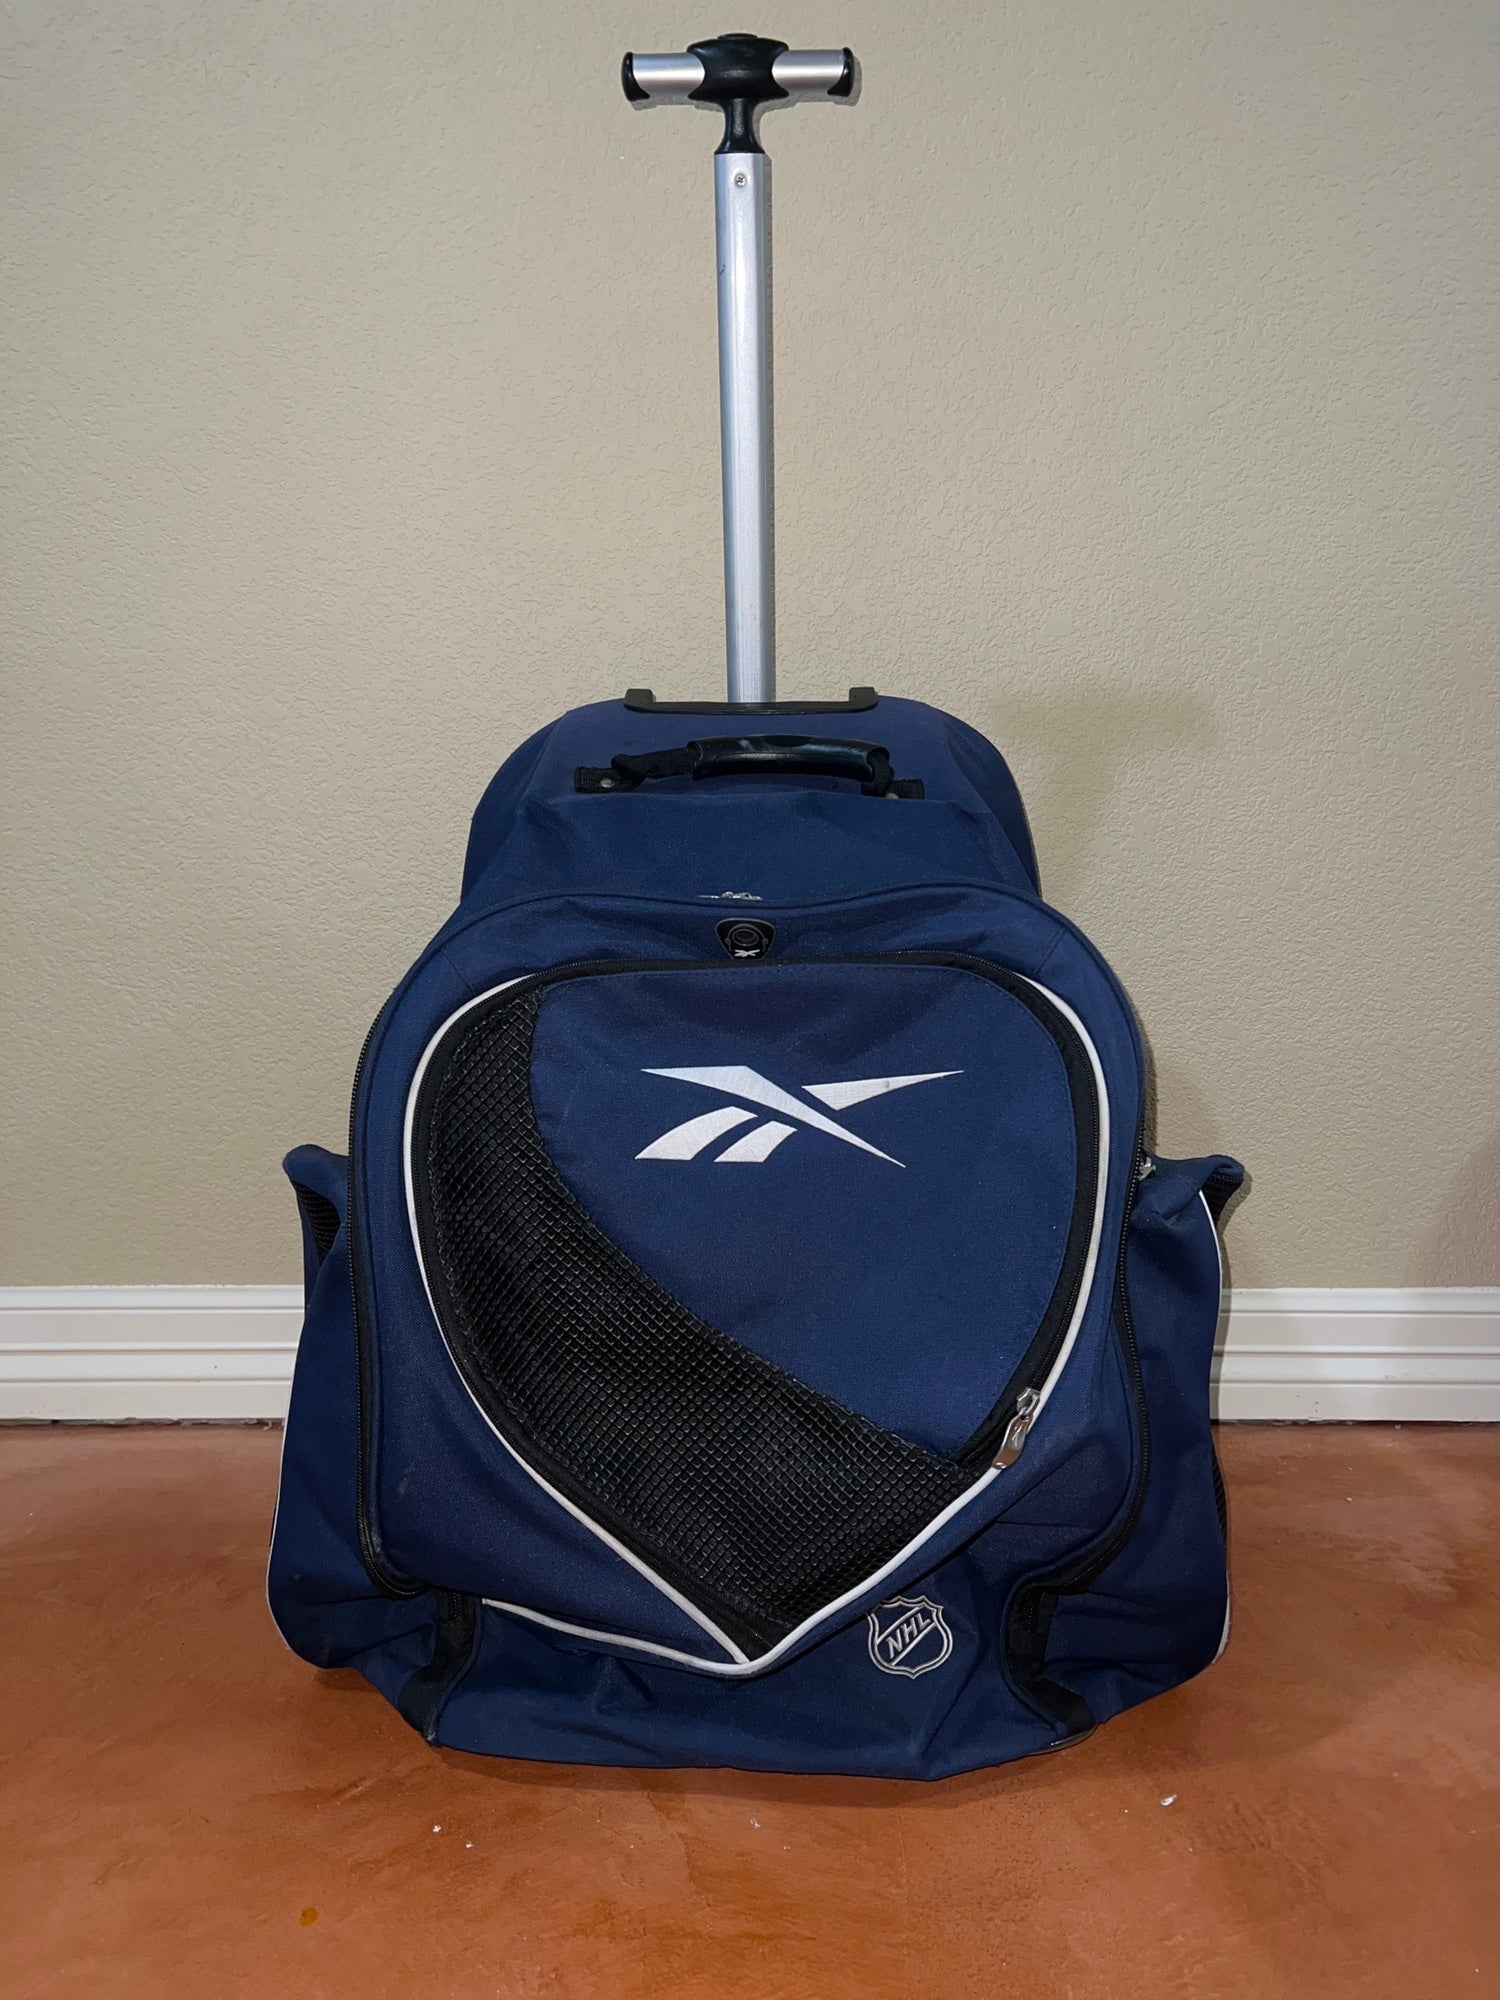 Reebok 10K Backpack Wheel Bag - Senior